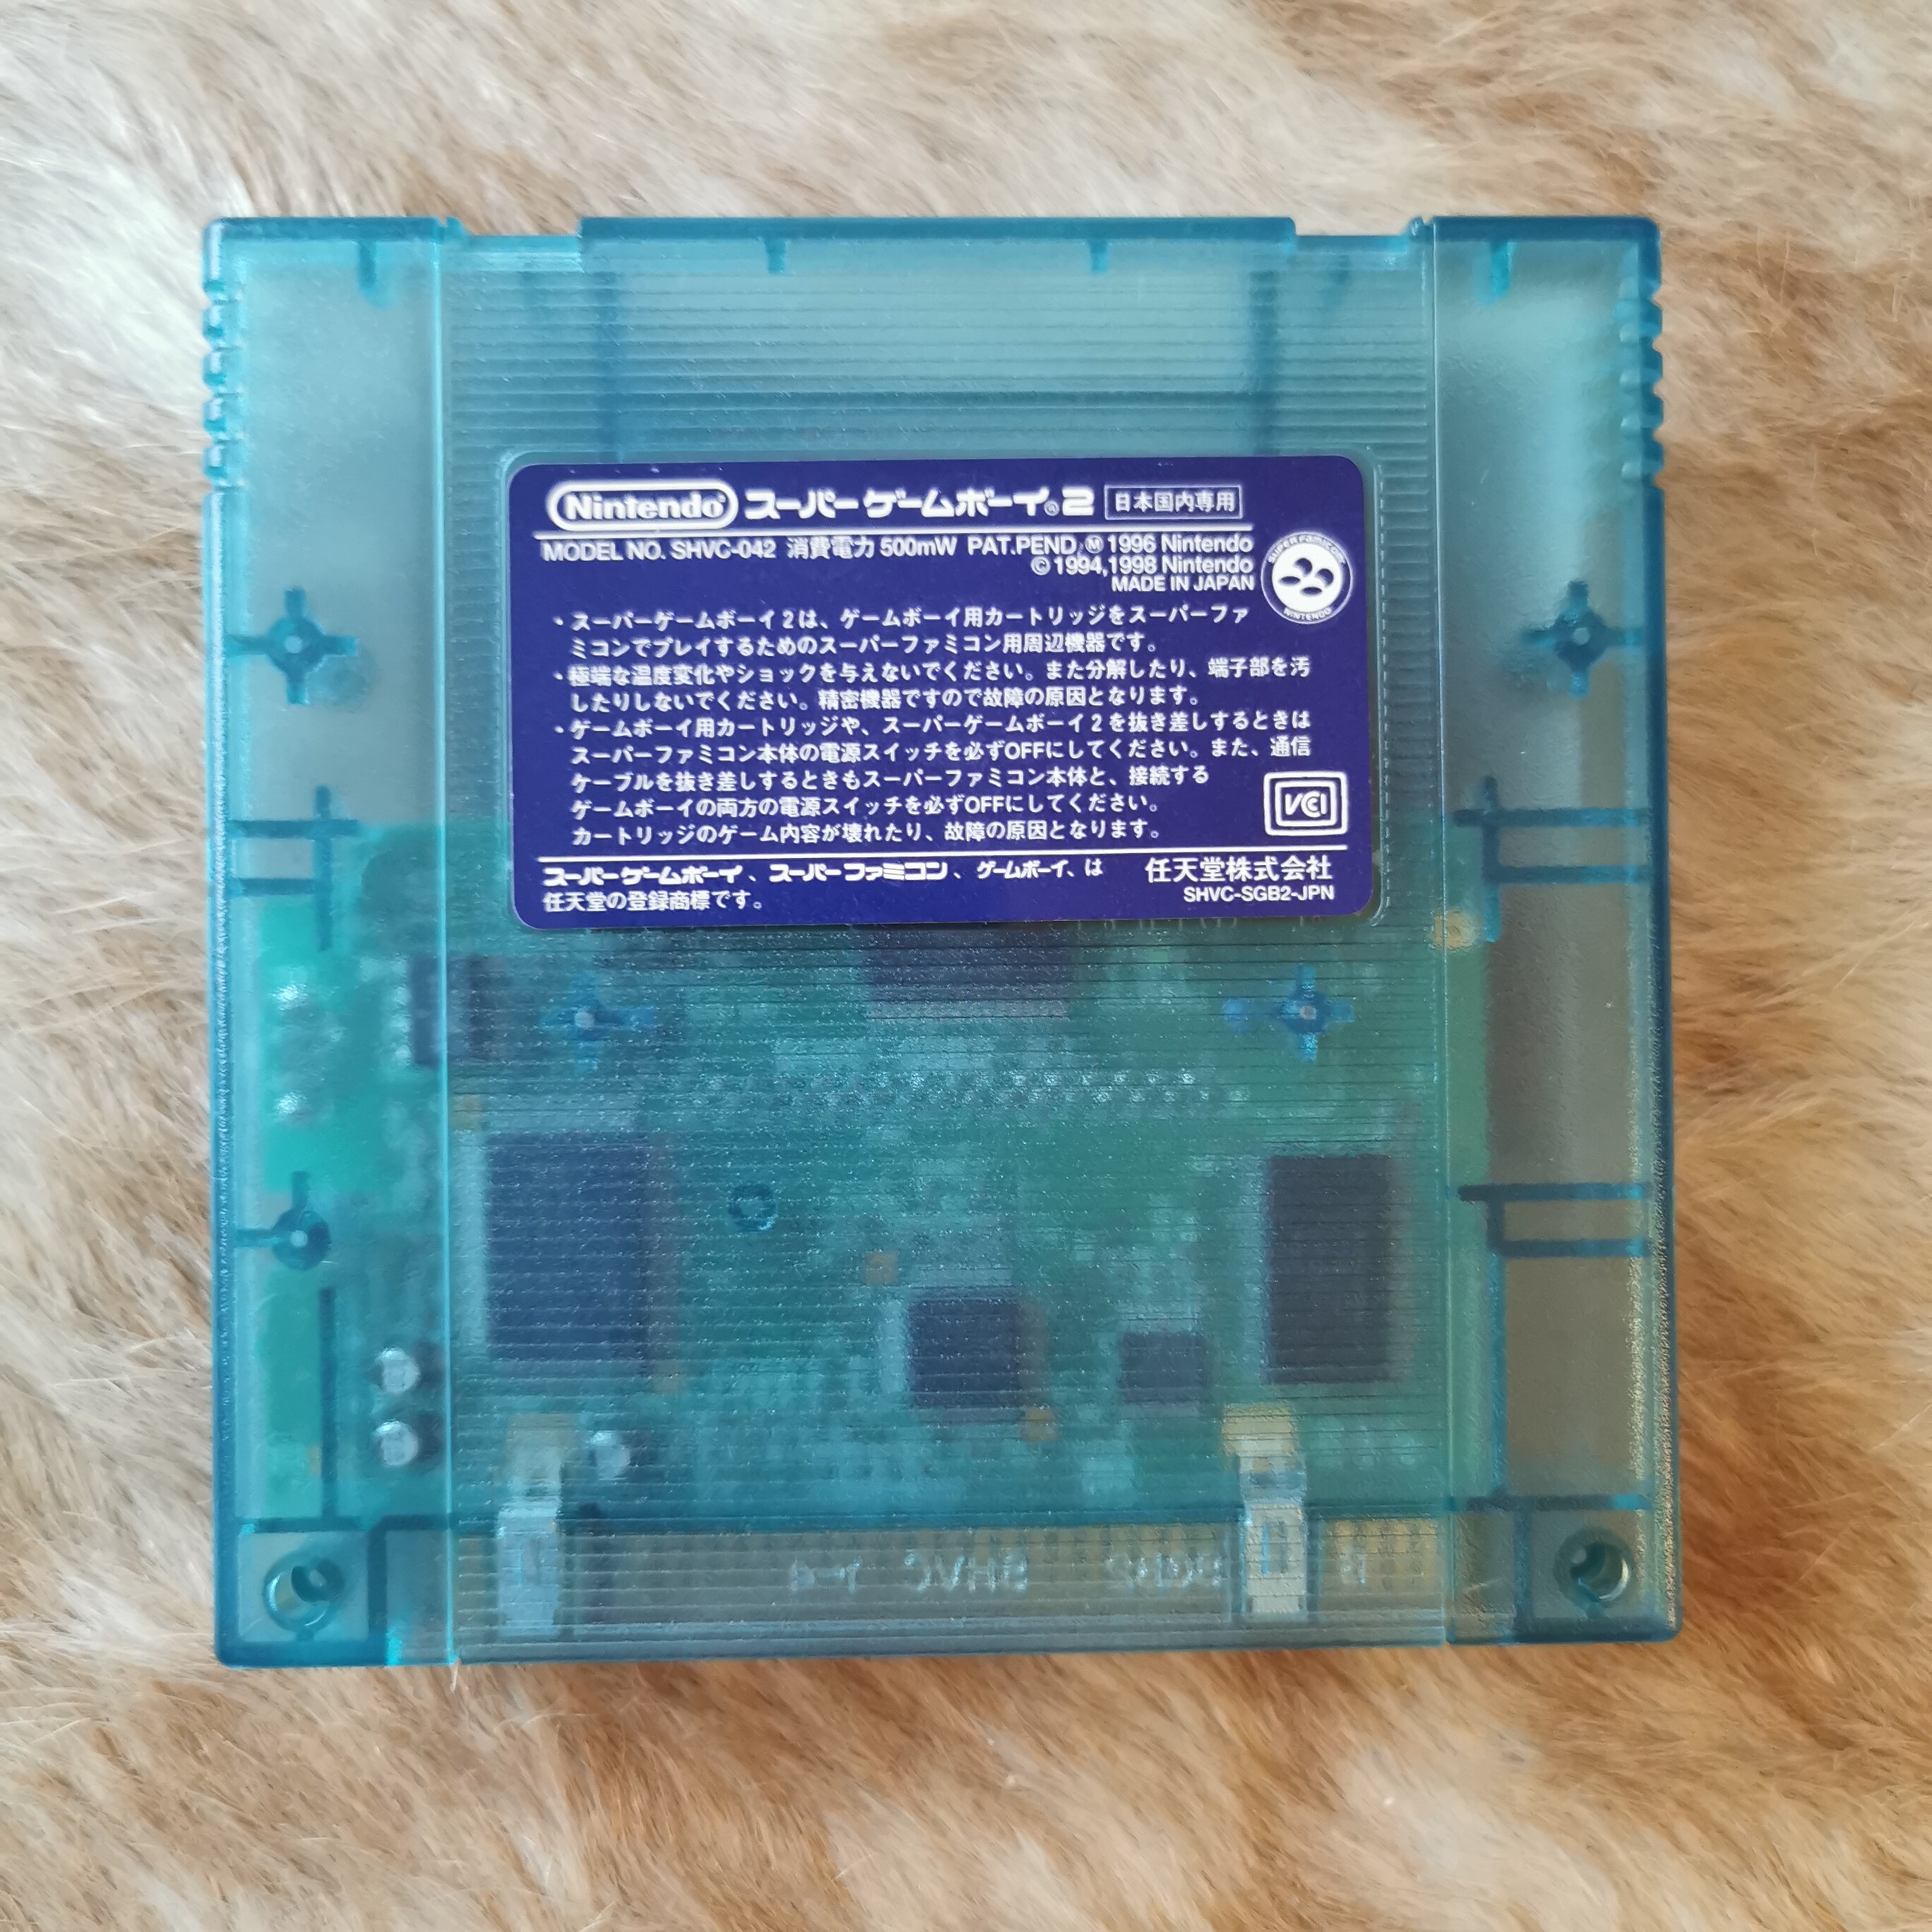 SNES Super Game Boy 2 - Consolevariations